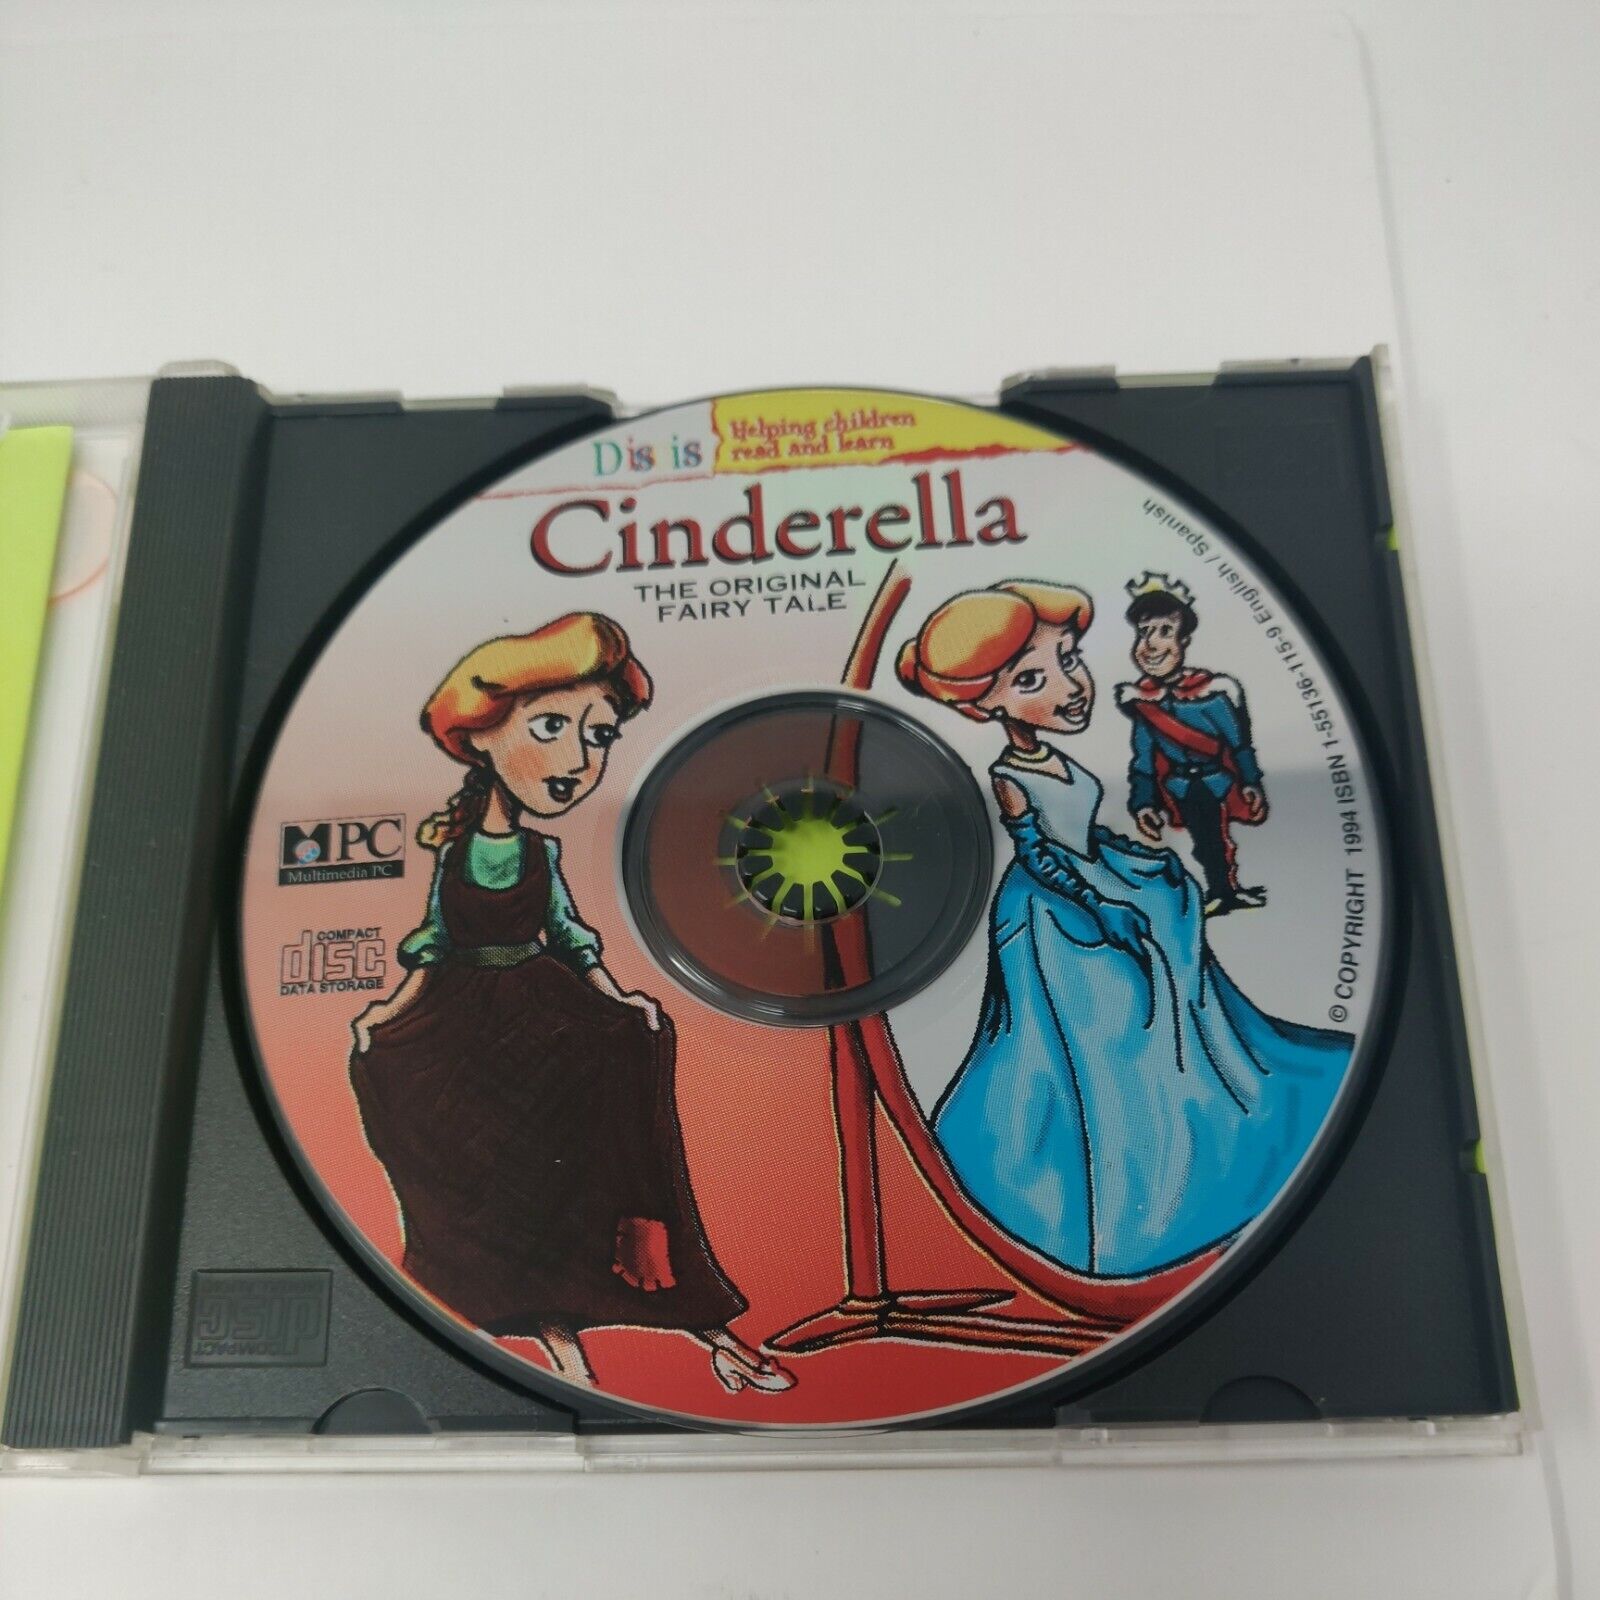 Discis Cinderella: The Original Fairy Tale - Kids Can Read CD-ROM Home Schooling